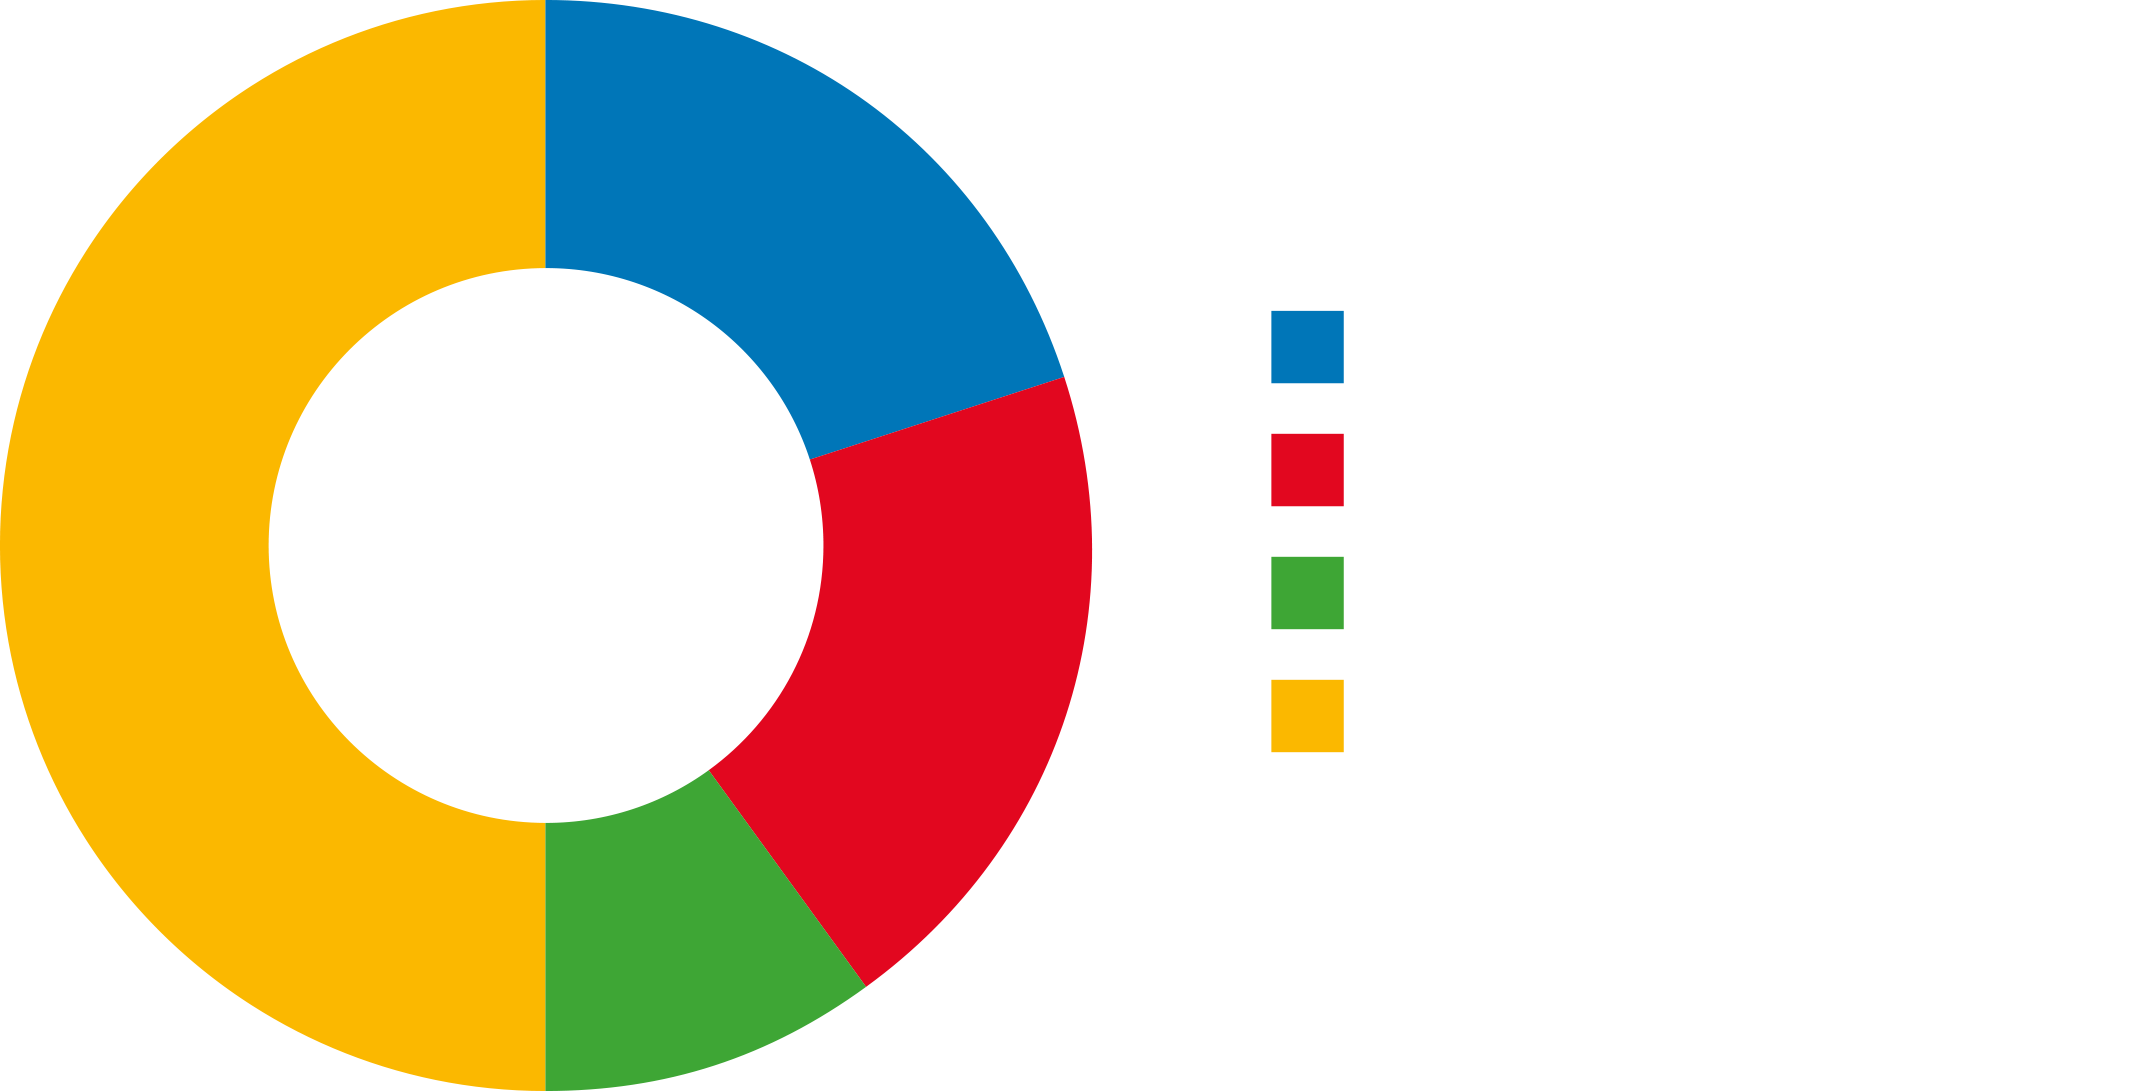 https://globalgoals-yearbook.org/wp-content/uploads/2020/07/Grafik-Distribution.png